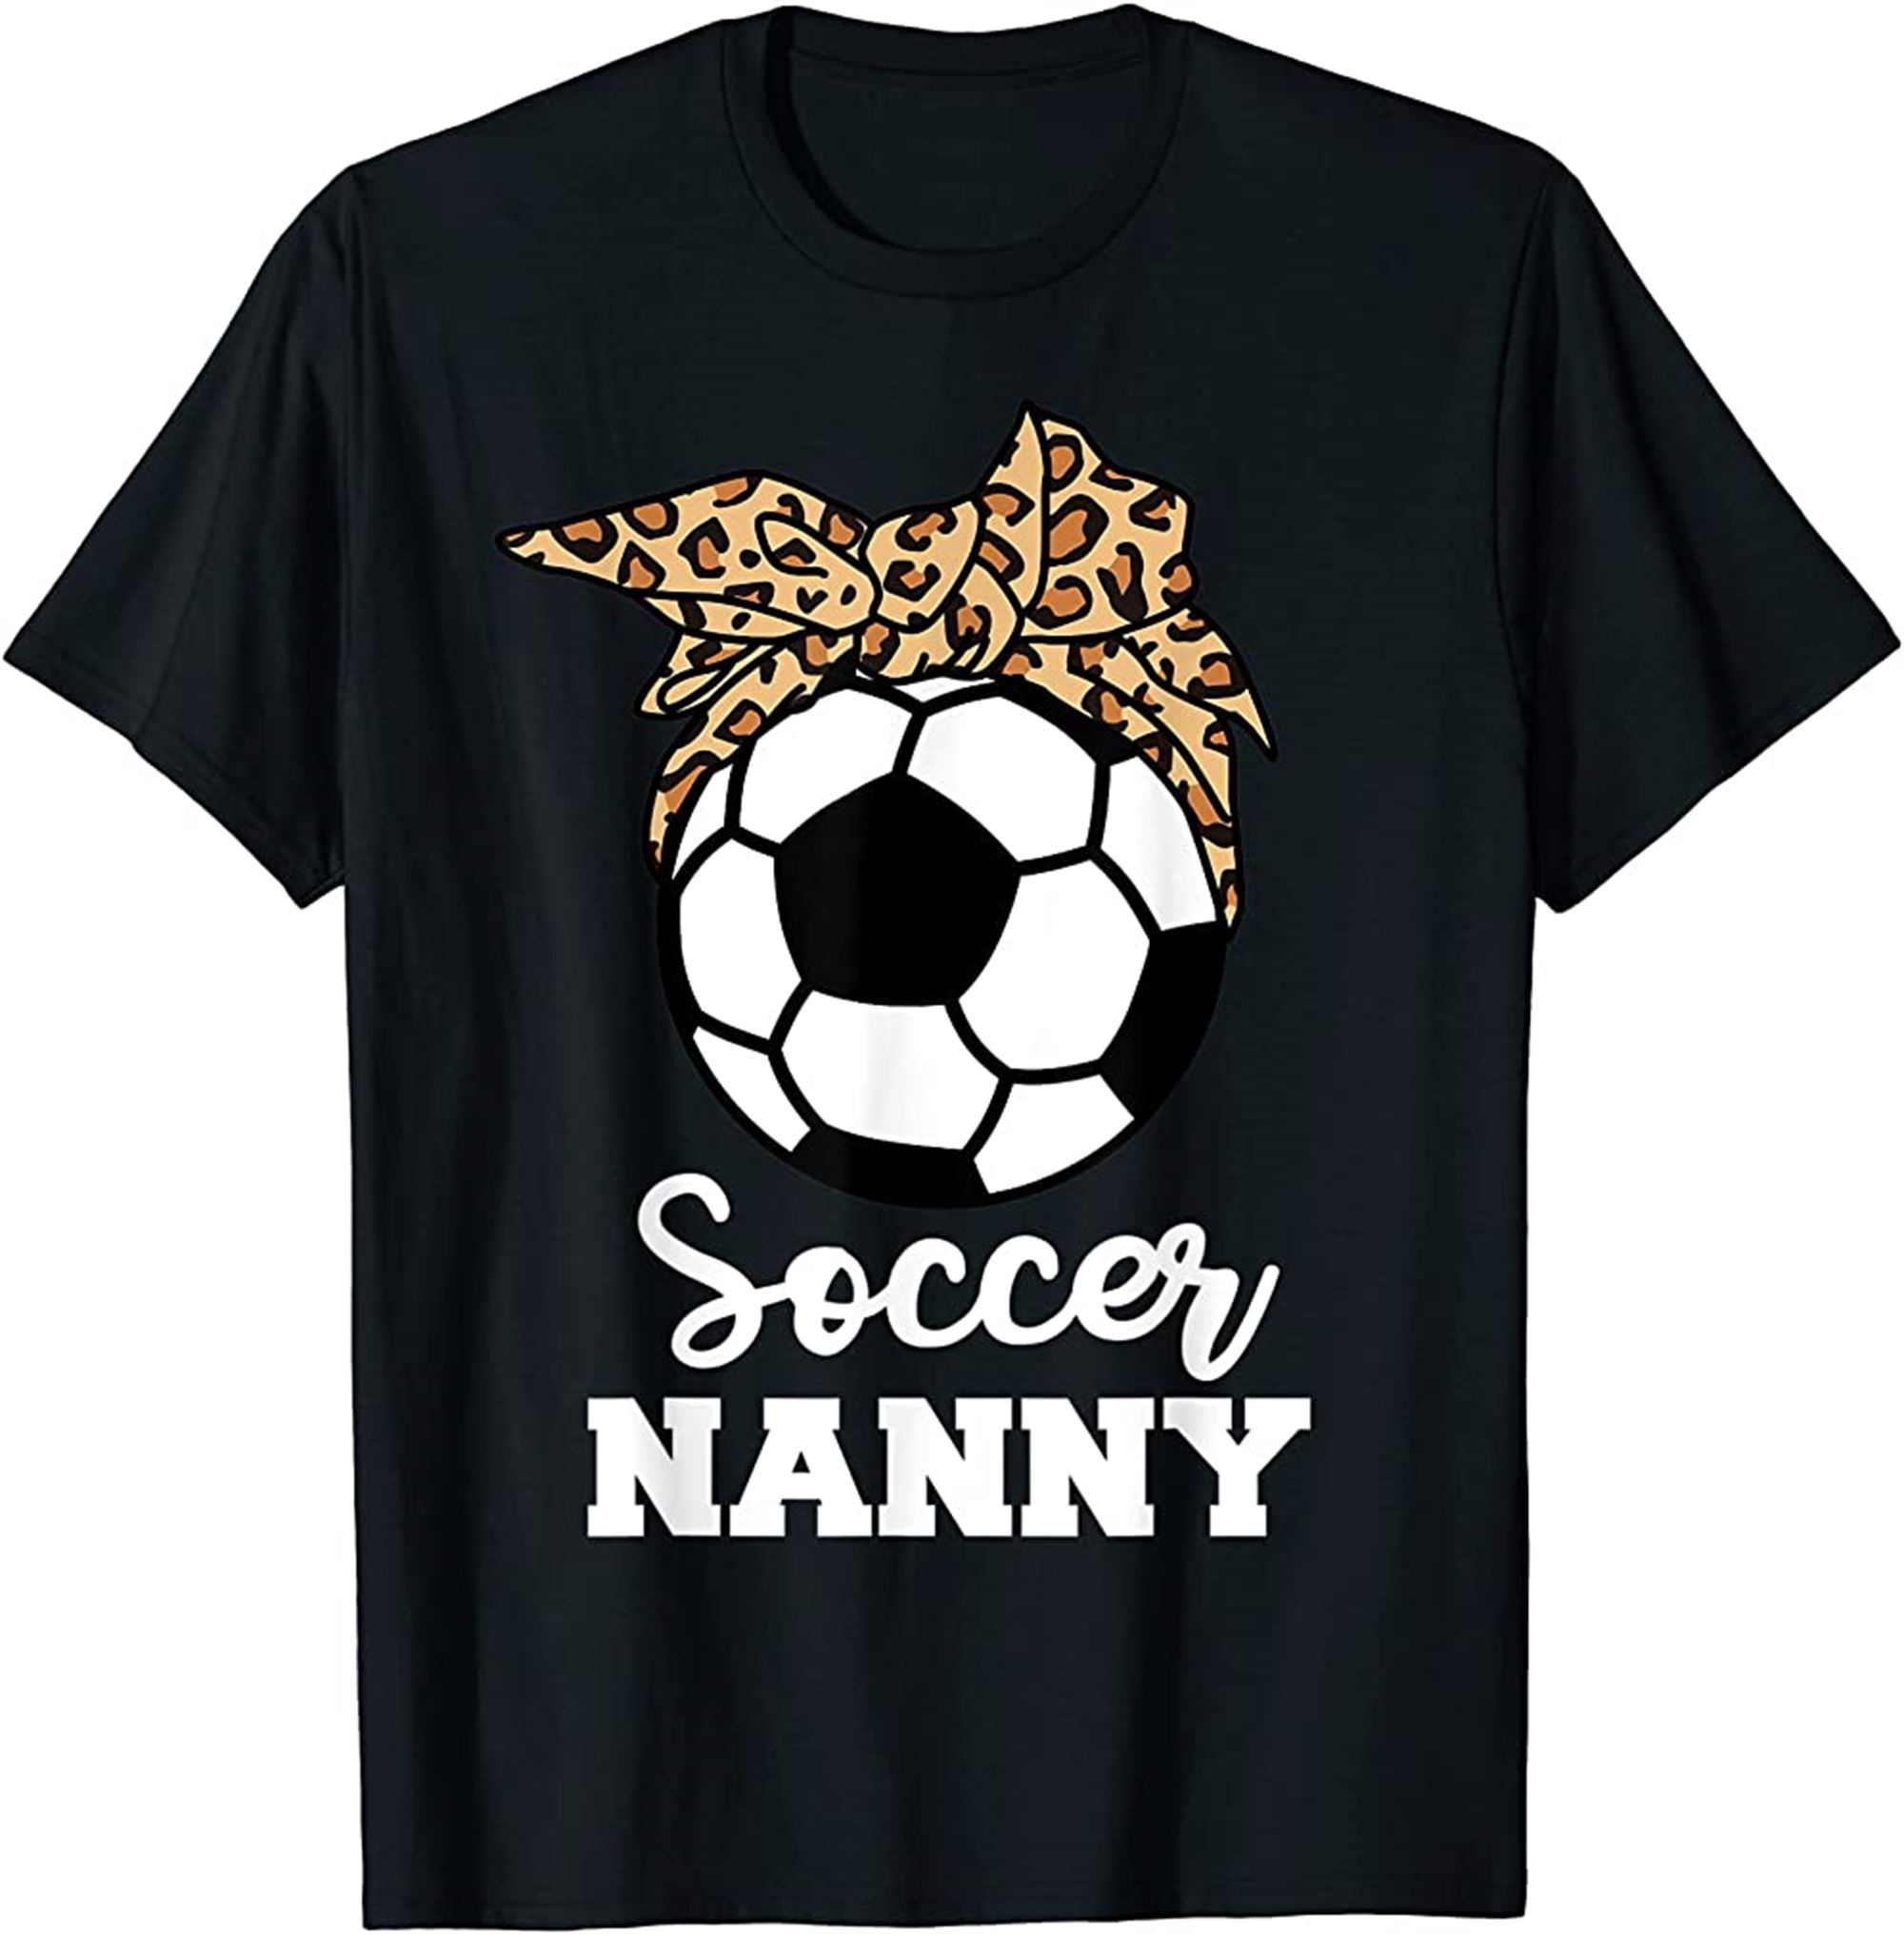 Soccer Nanny Funny Soccer Player Leopard Nanny T-shirt Size Up To 5xl